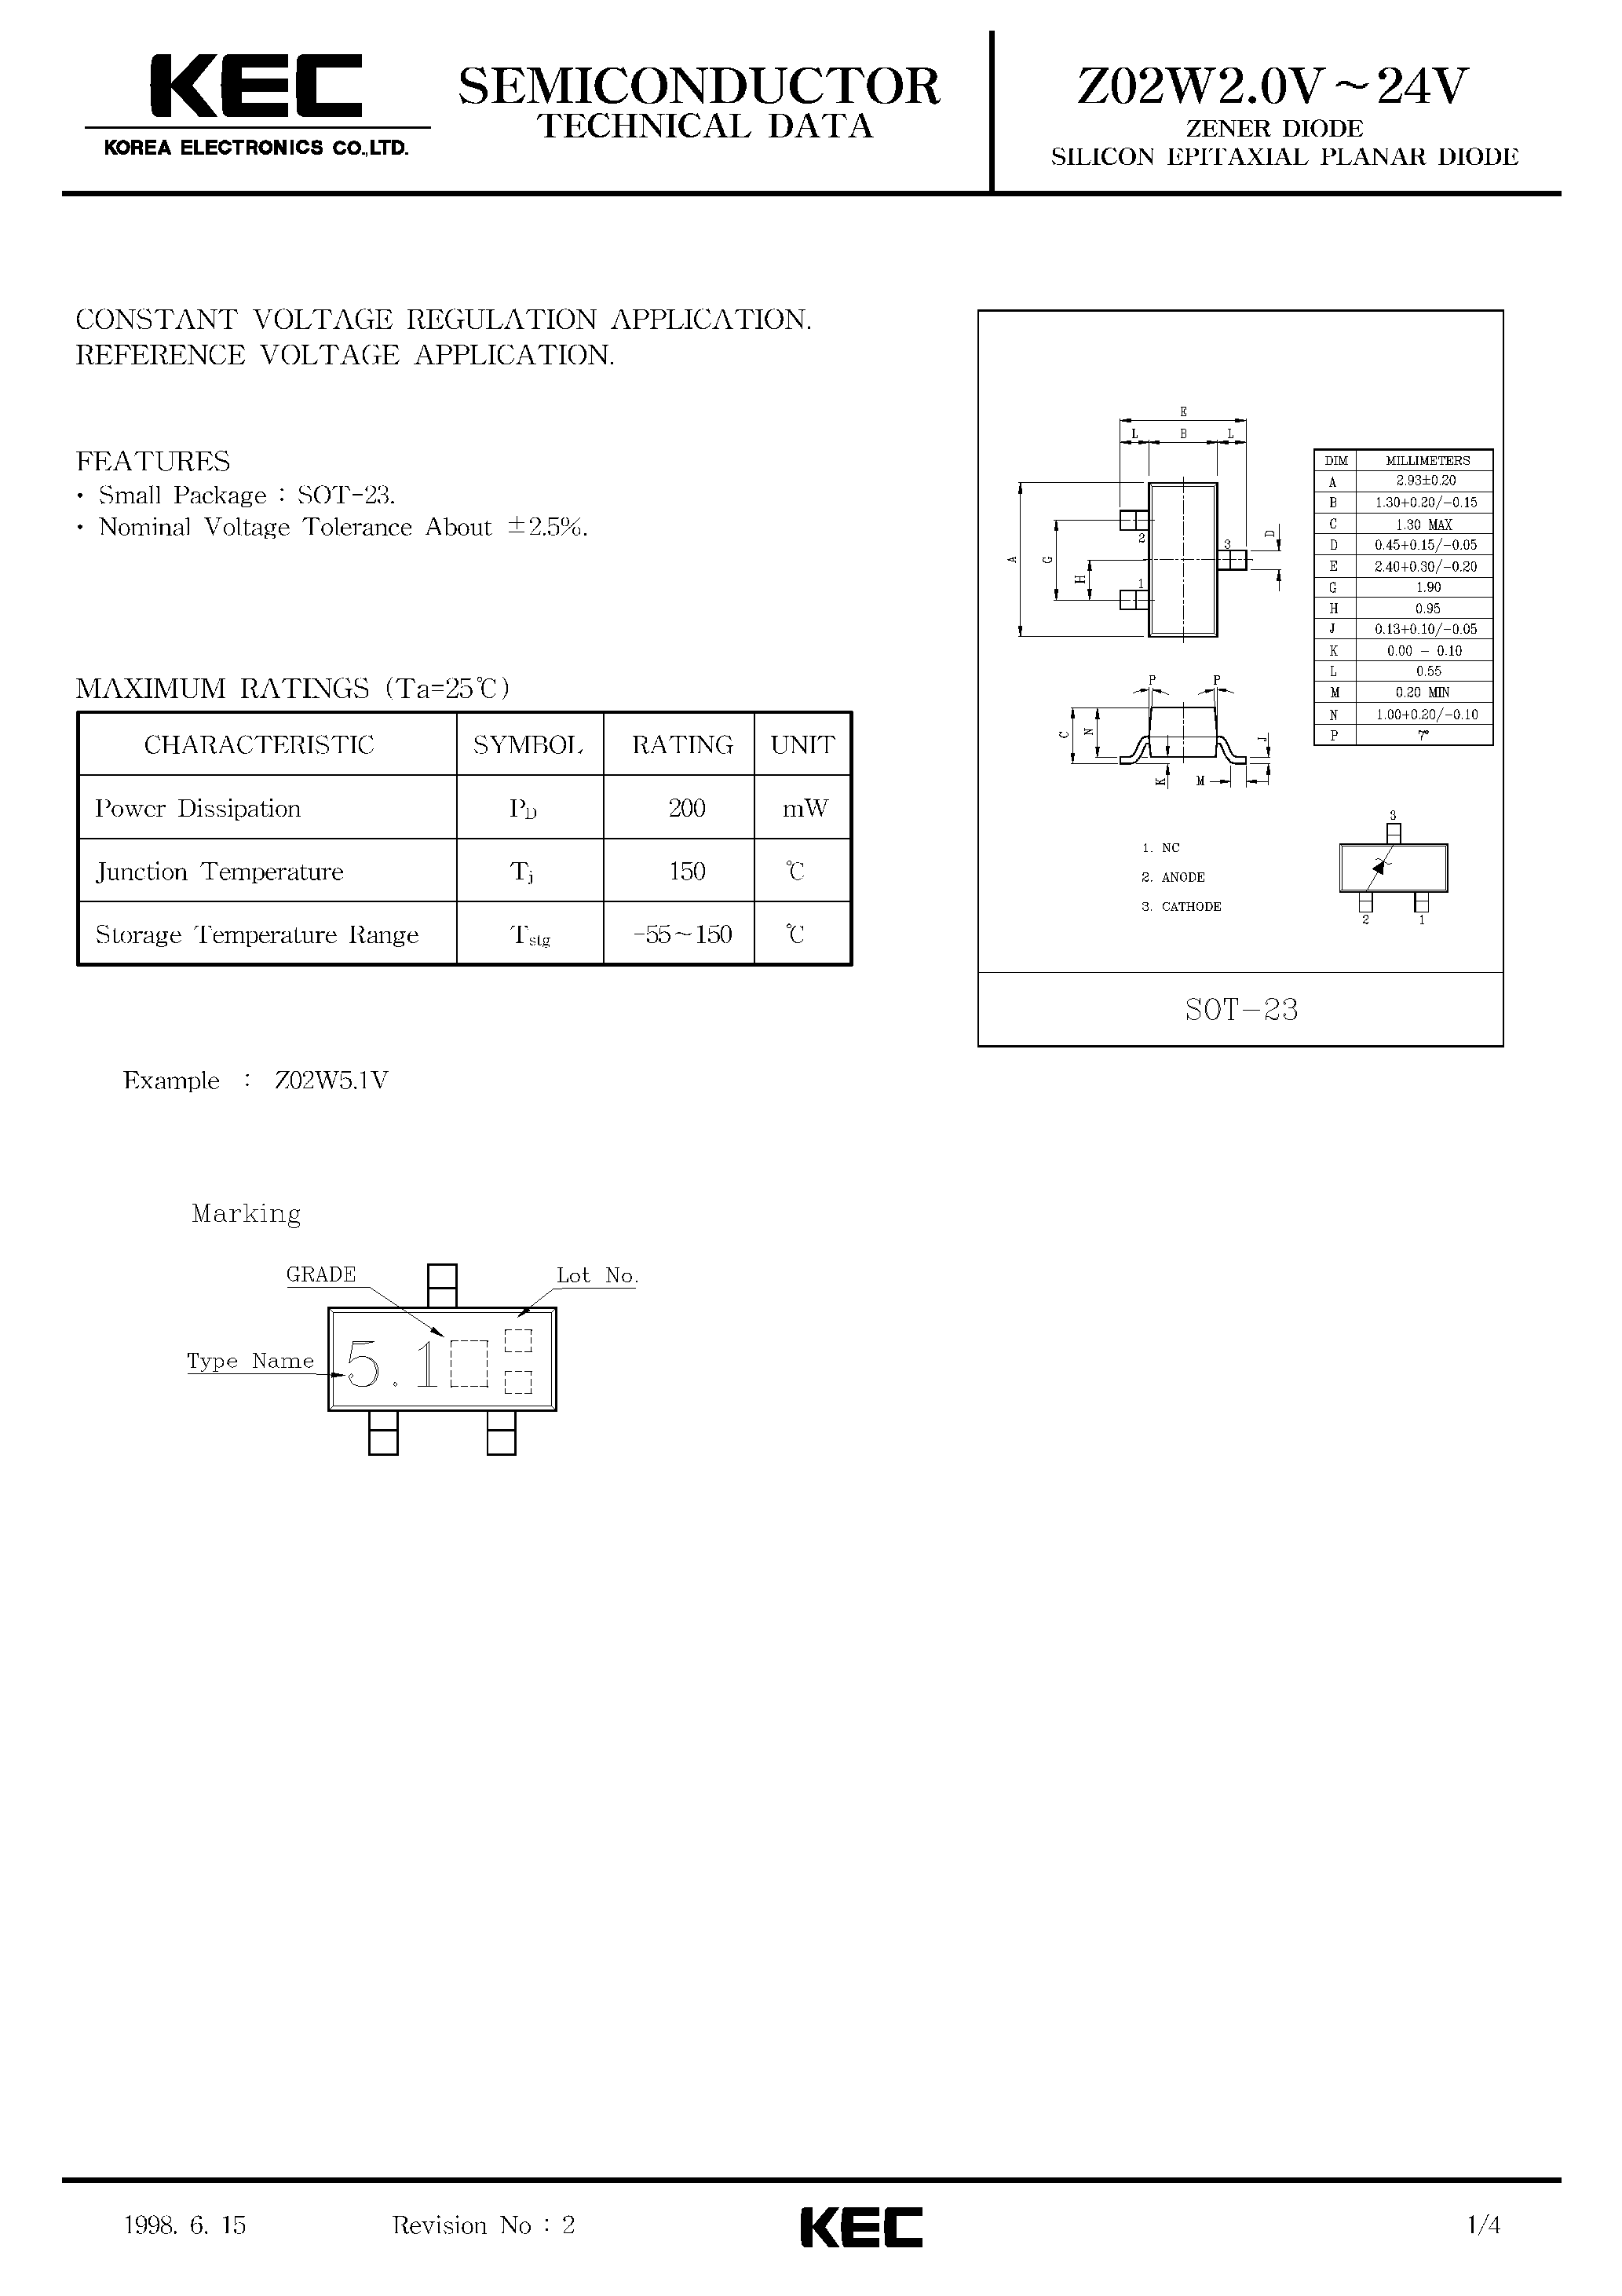 Datasheet Z02W62V - ZENER DIODE SILICON EPITAXIAL PLANAR DIODE (CONSTANT VOLTAGE REGULATION/ REFERENCE VOLTAGE) page 1